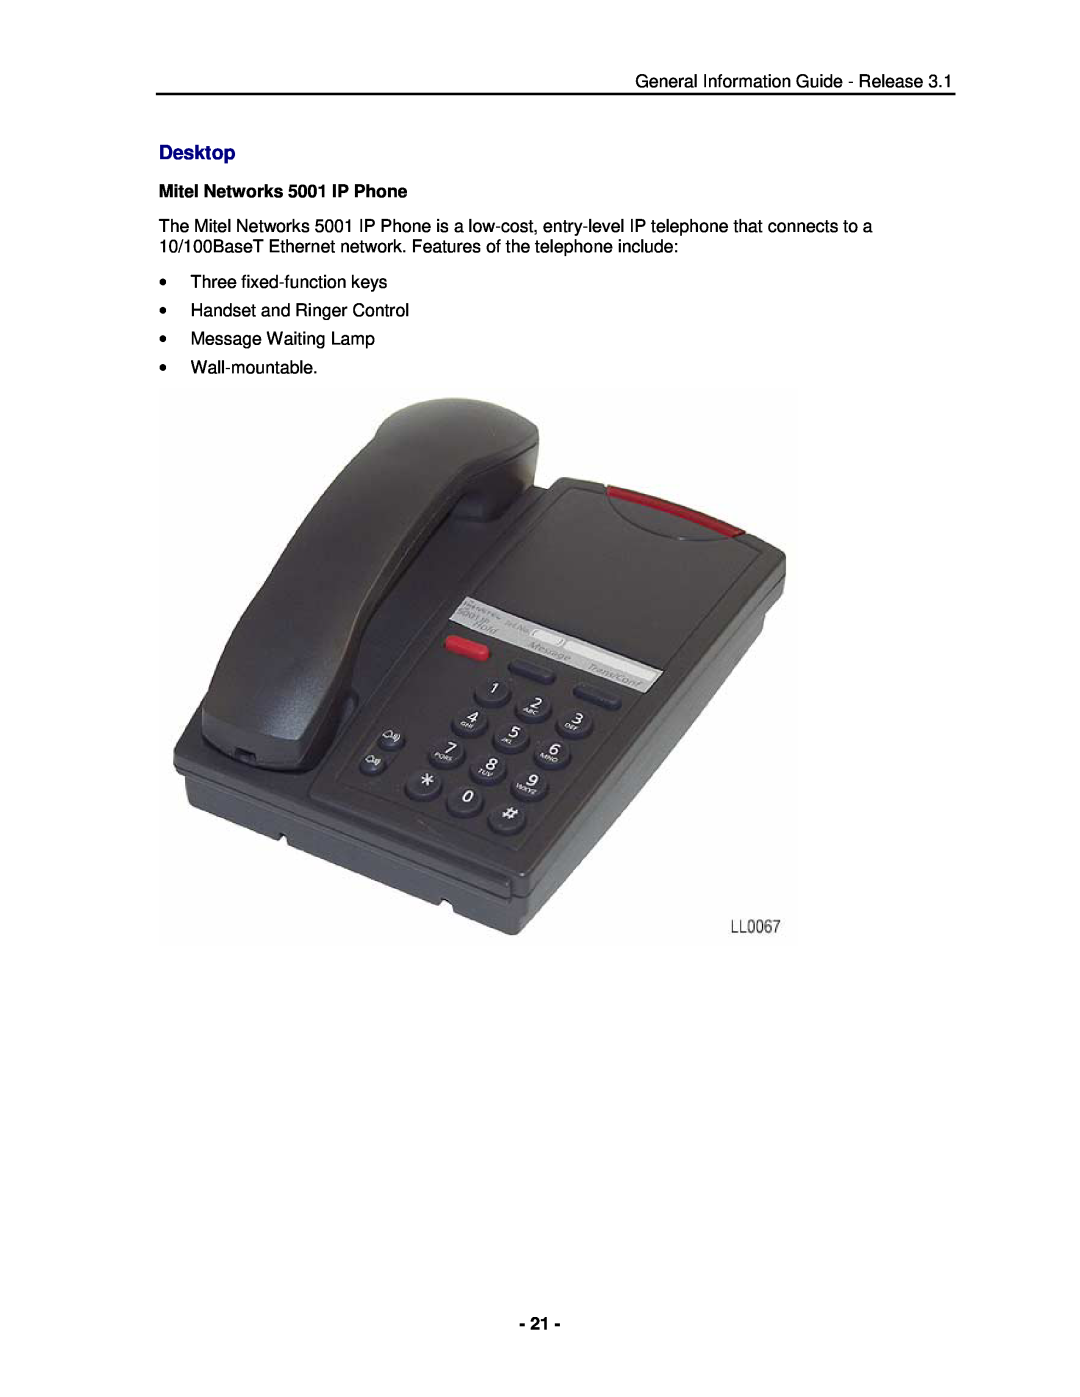 Mitel 3300 manual Desktop, Mitel Networks 5001 IP Phone 